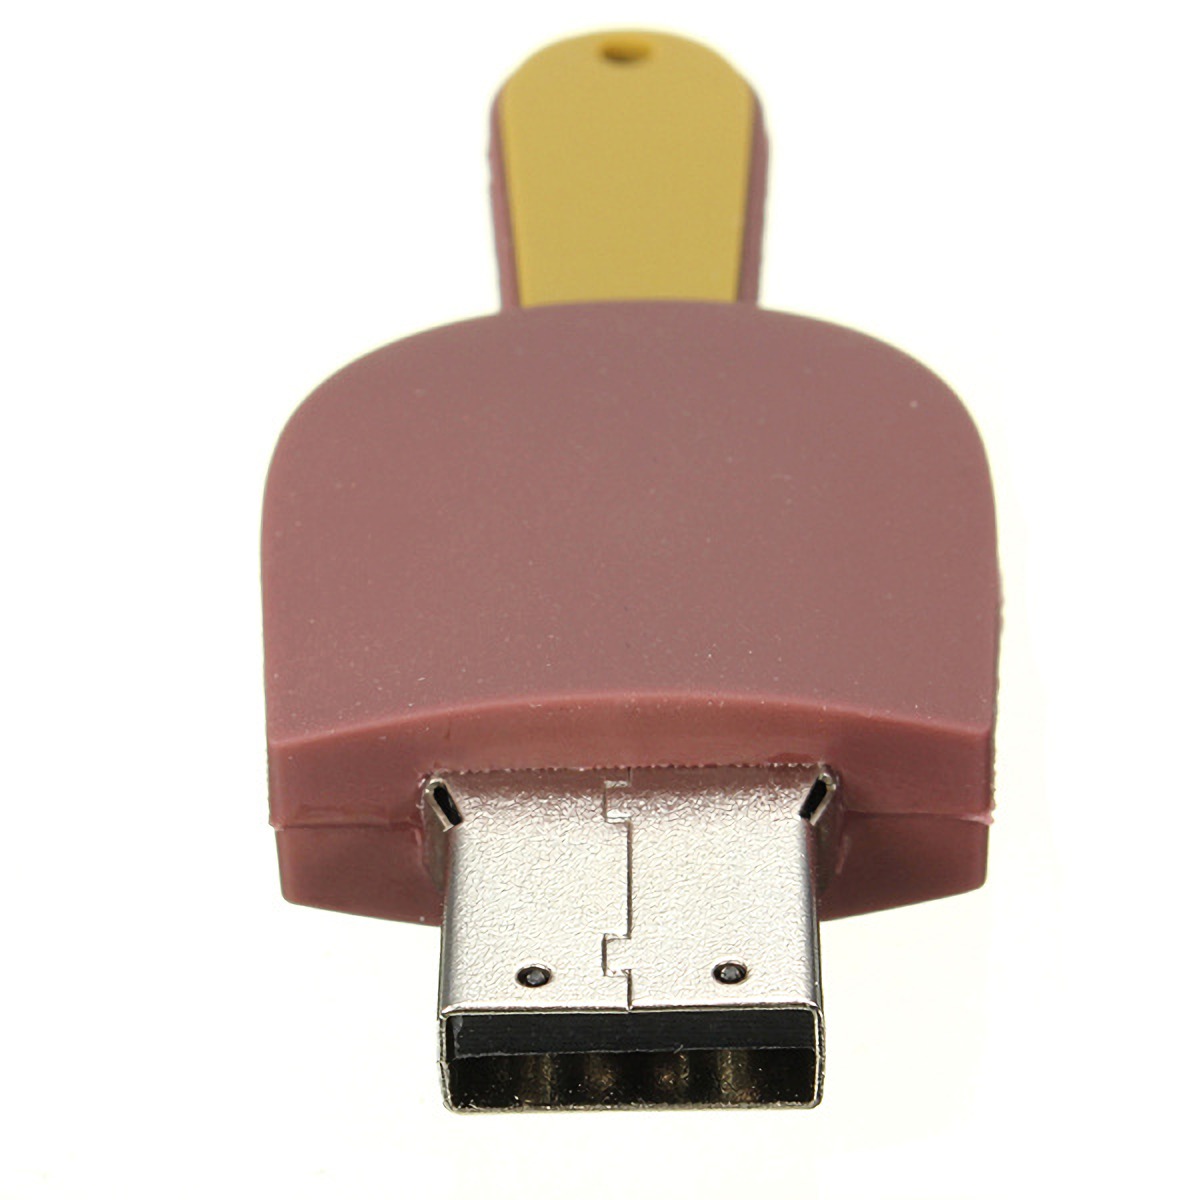 16GB-USB20-Chocolate-Ice-Cream-Model-Flash-Drive-Memory-U-Disk-961651-8